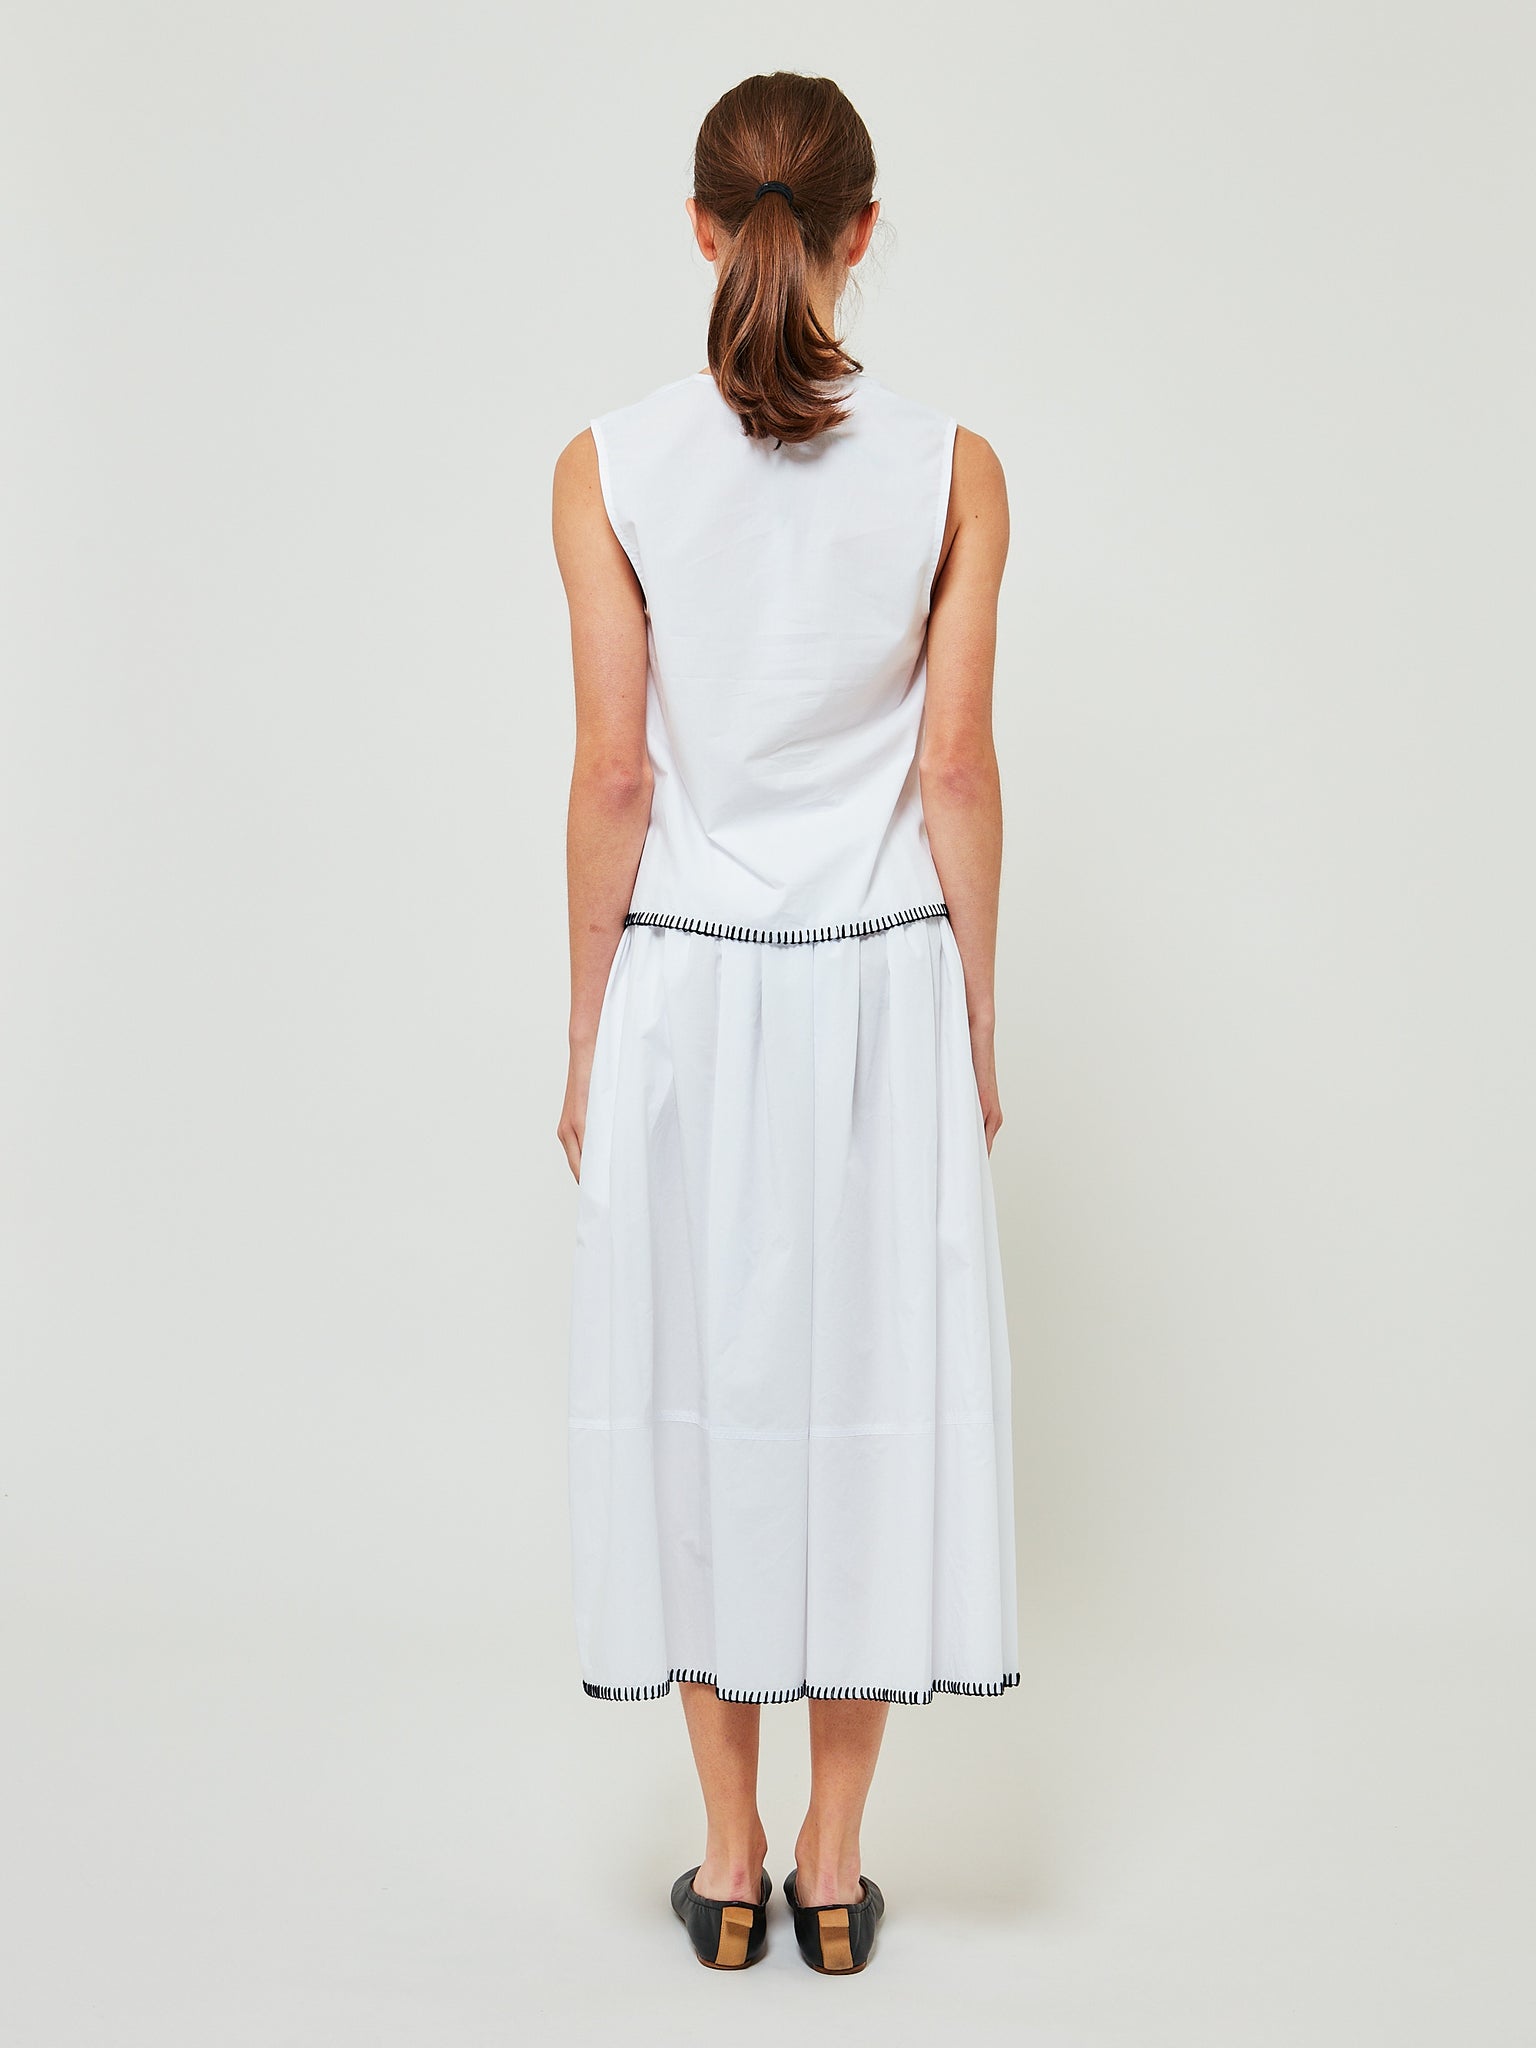 Gathered Skirt Optical White Embroidered